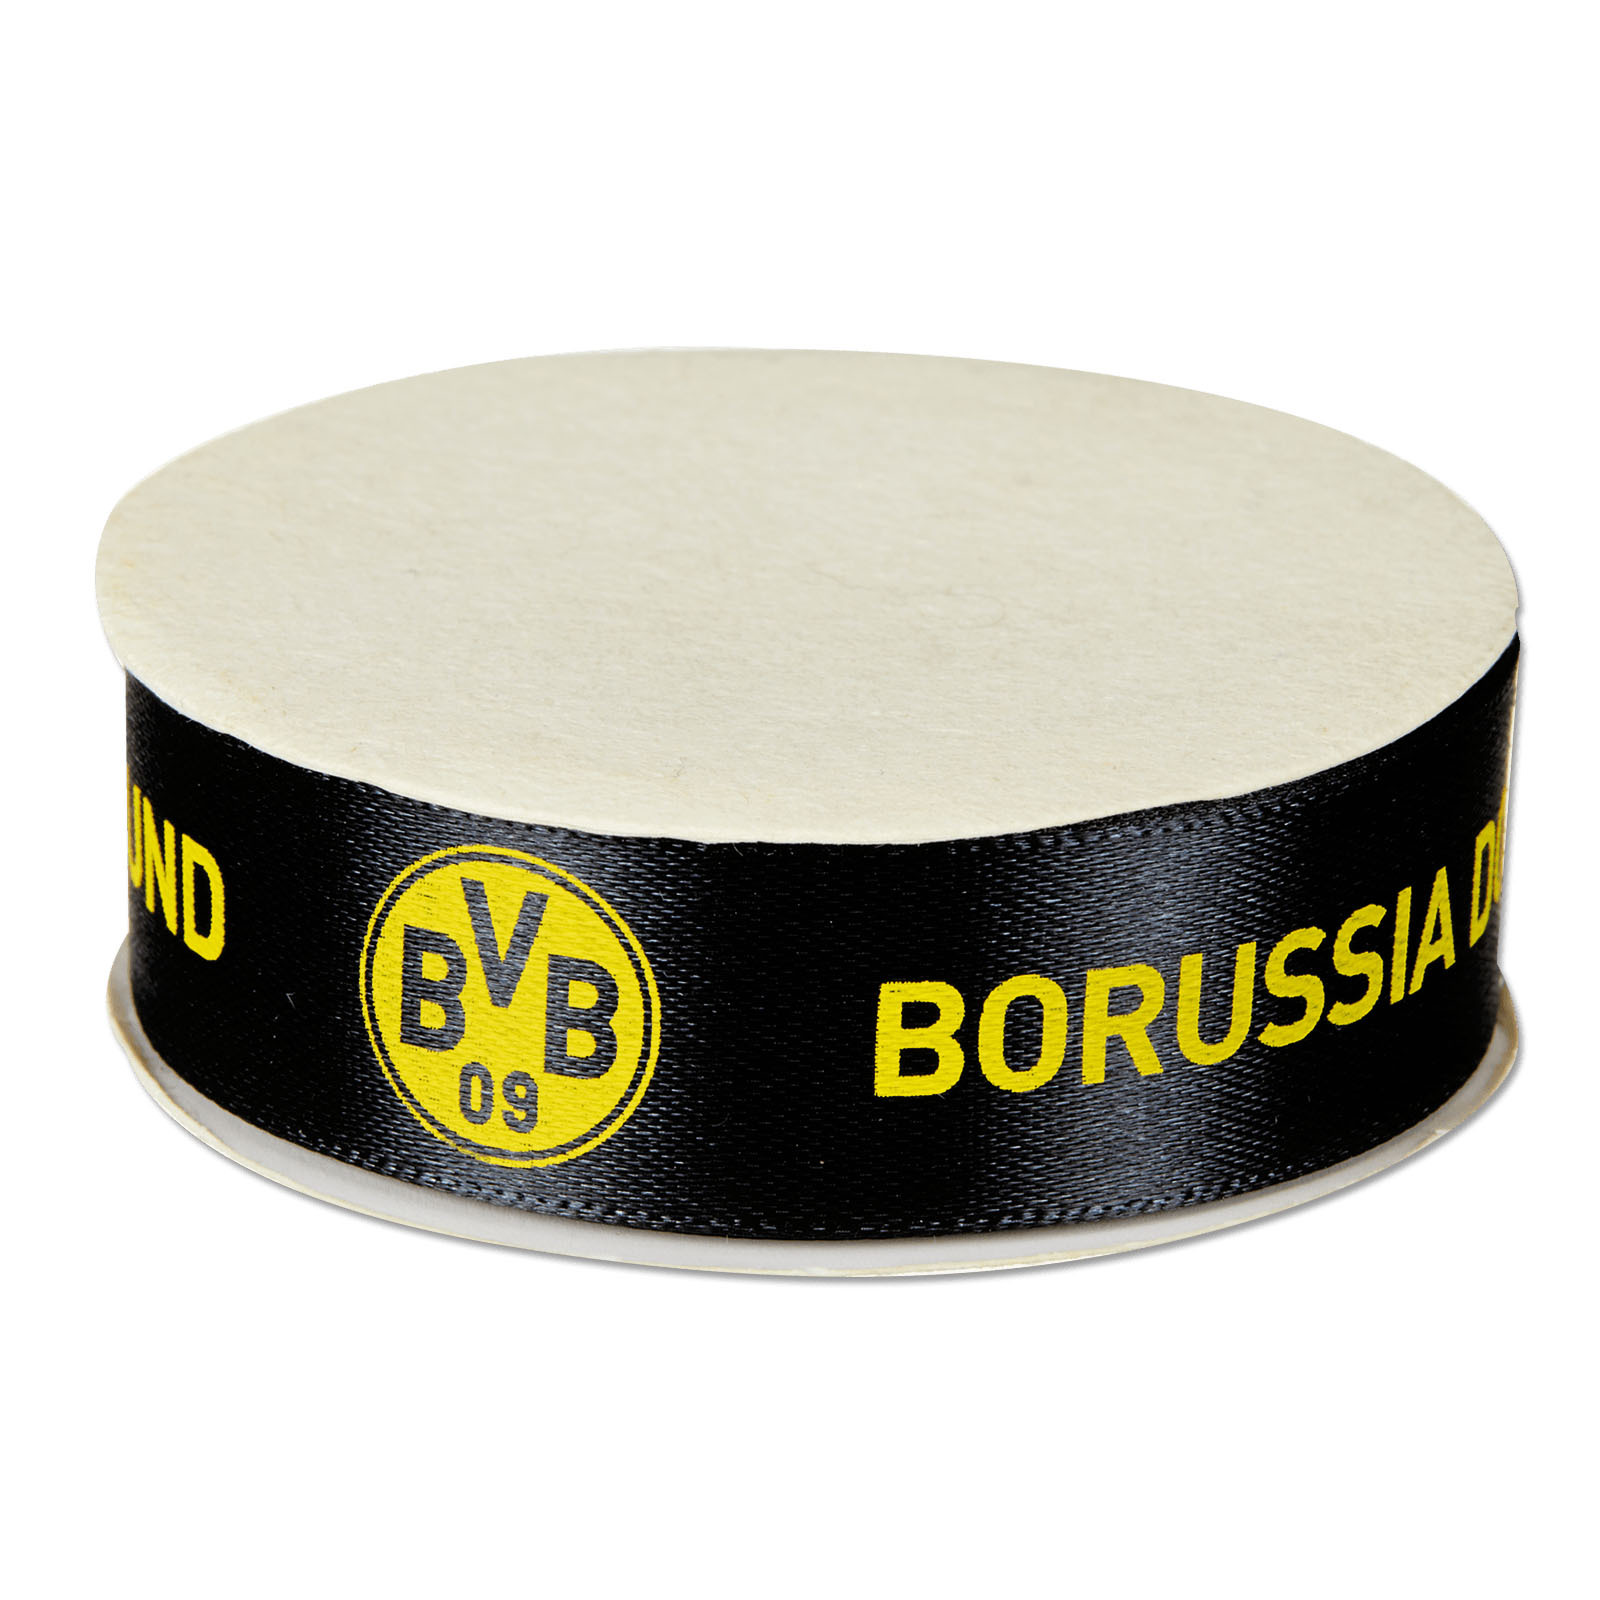 Borussia Dortmund 20332118 Tour empilable Jaune 500 g 